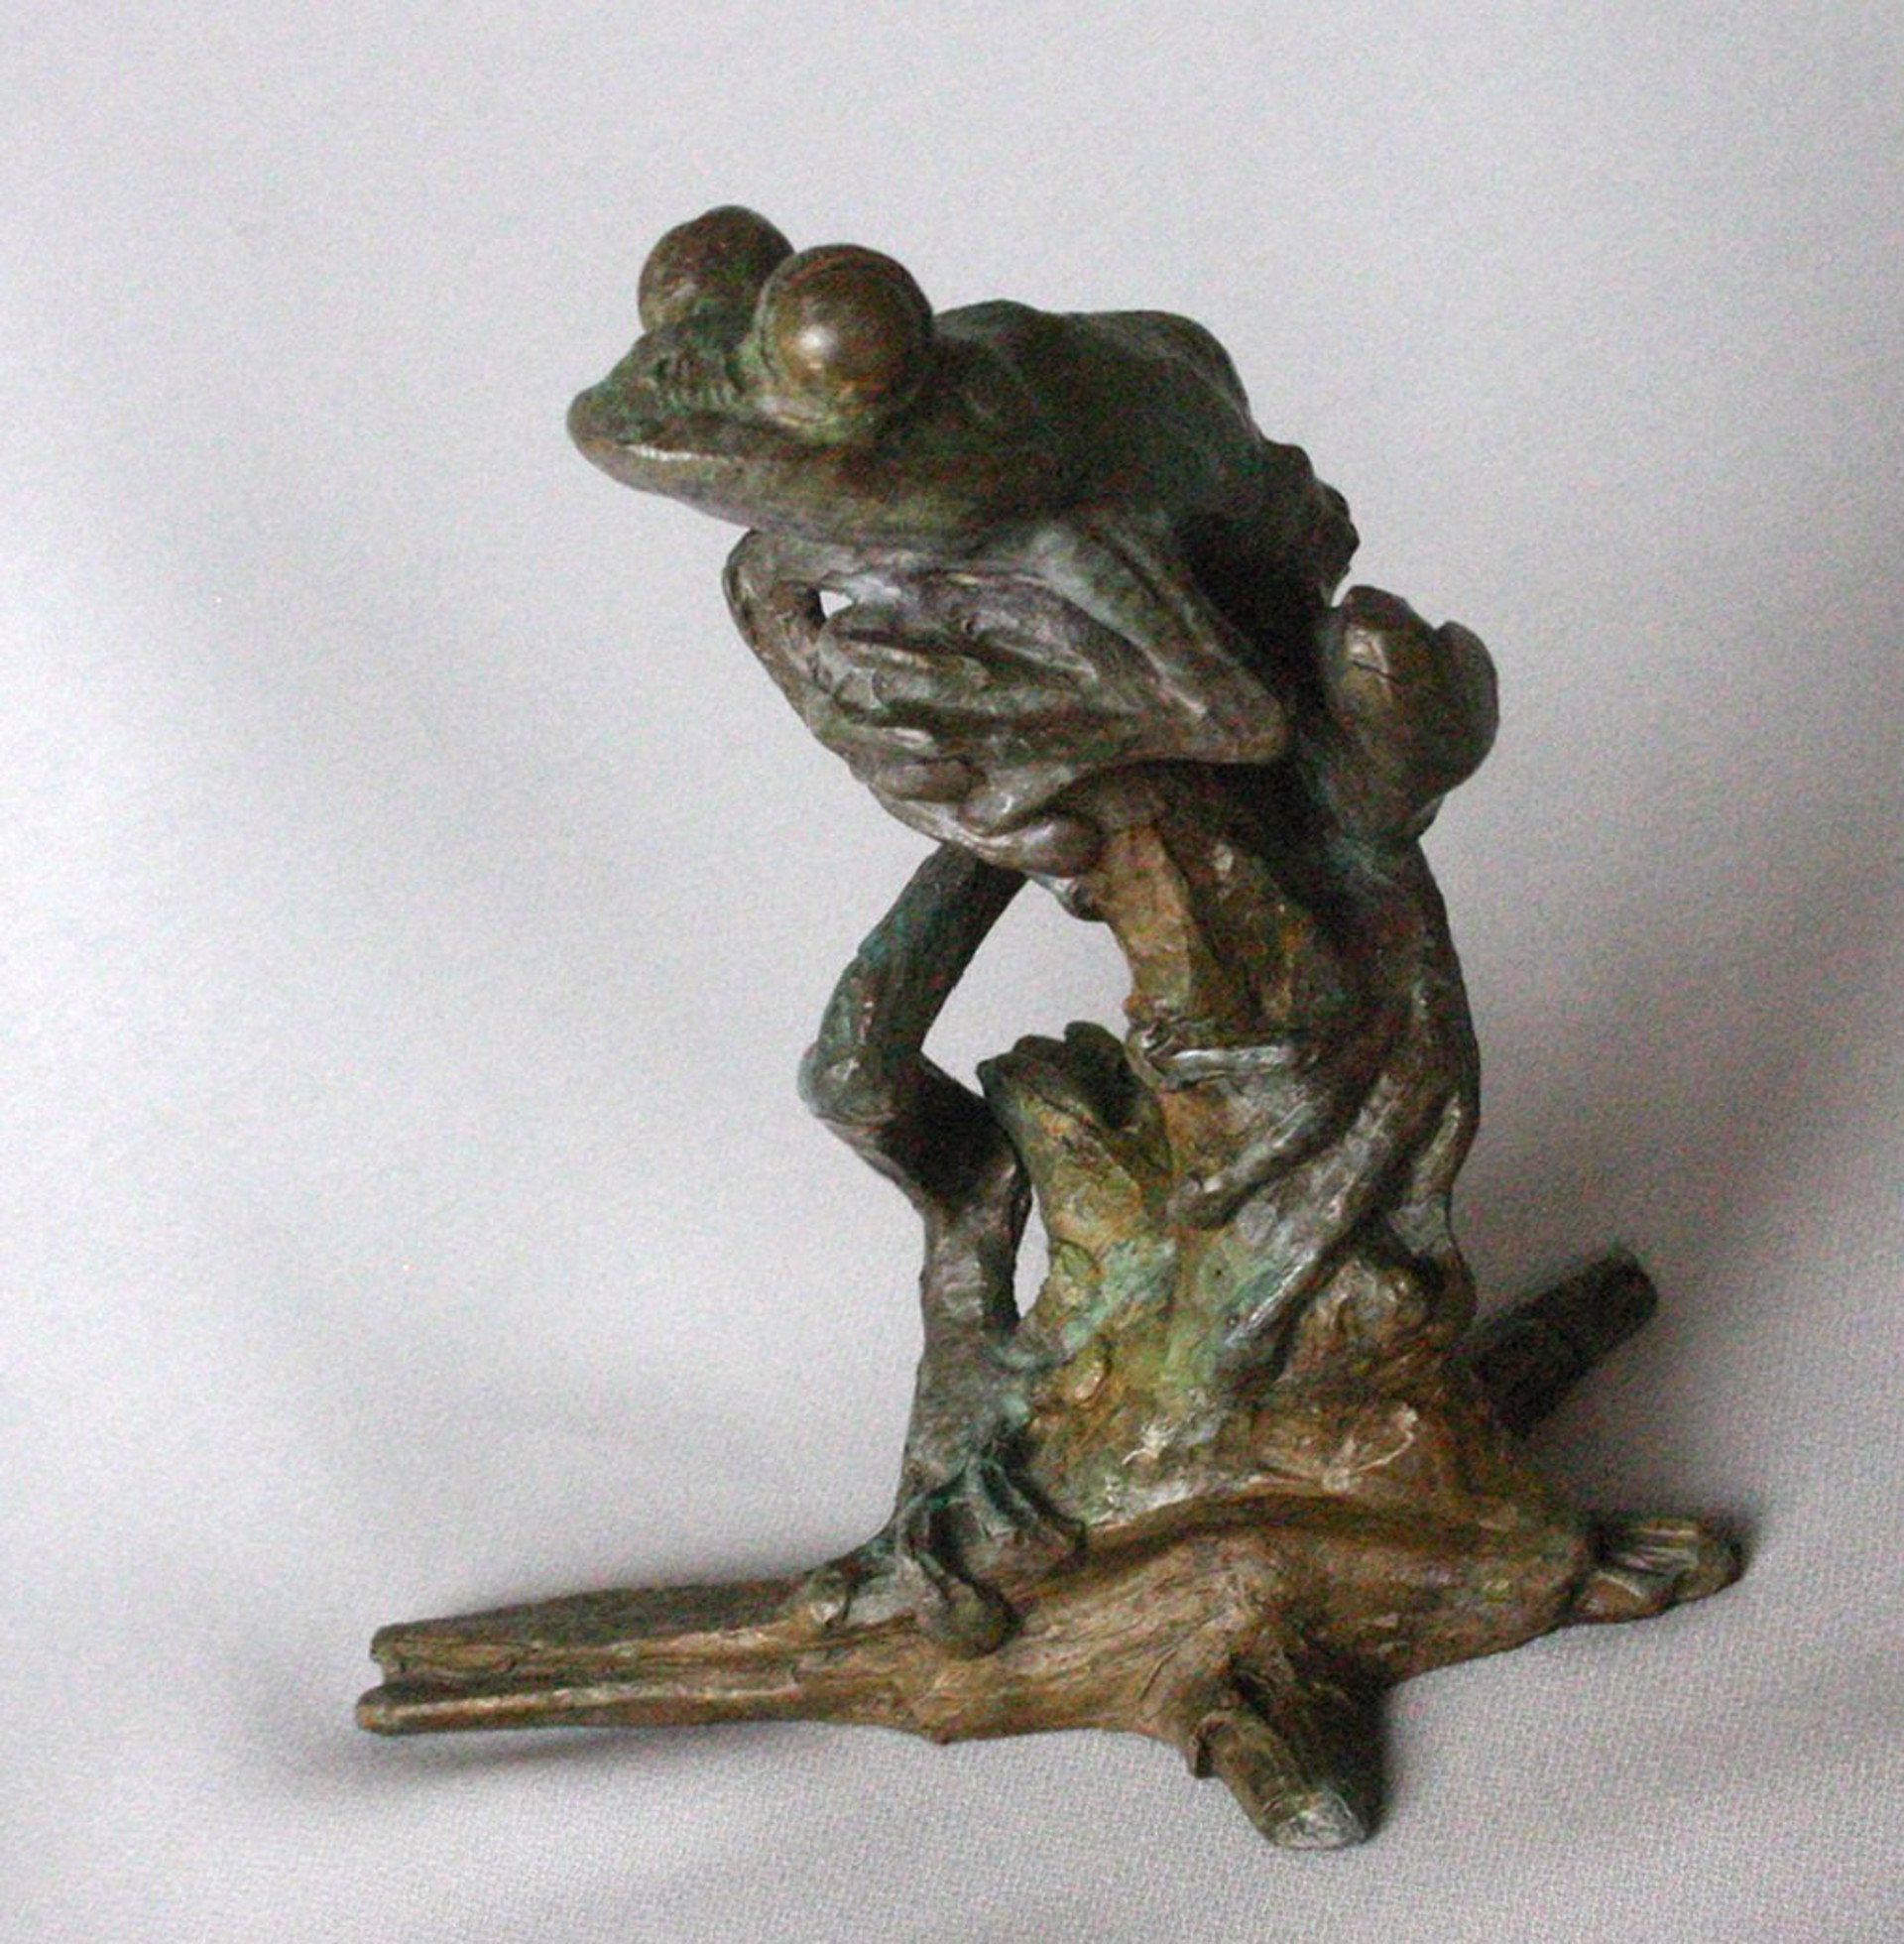 Tree Frog B by Dan Chen